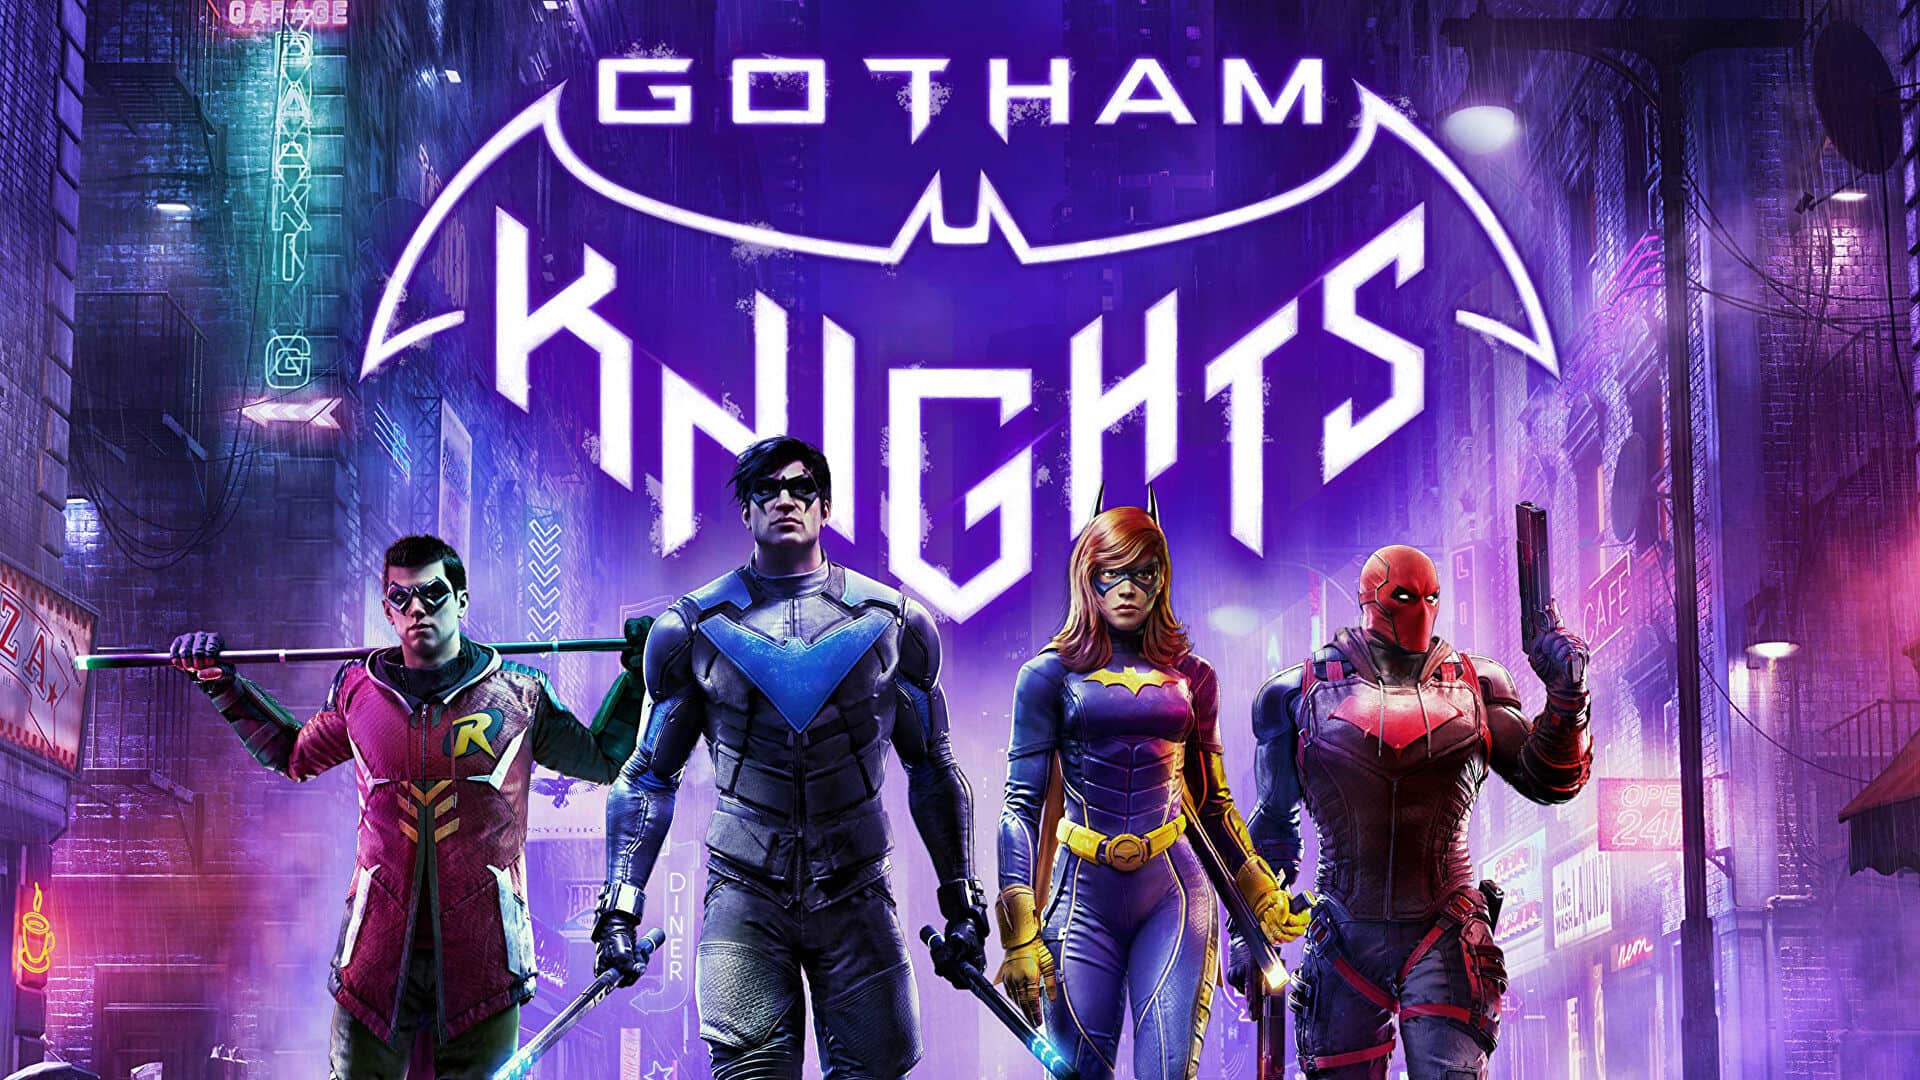 will batman be in gotham knights